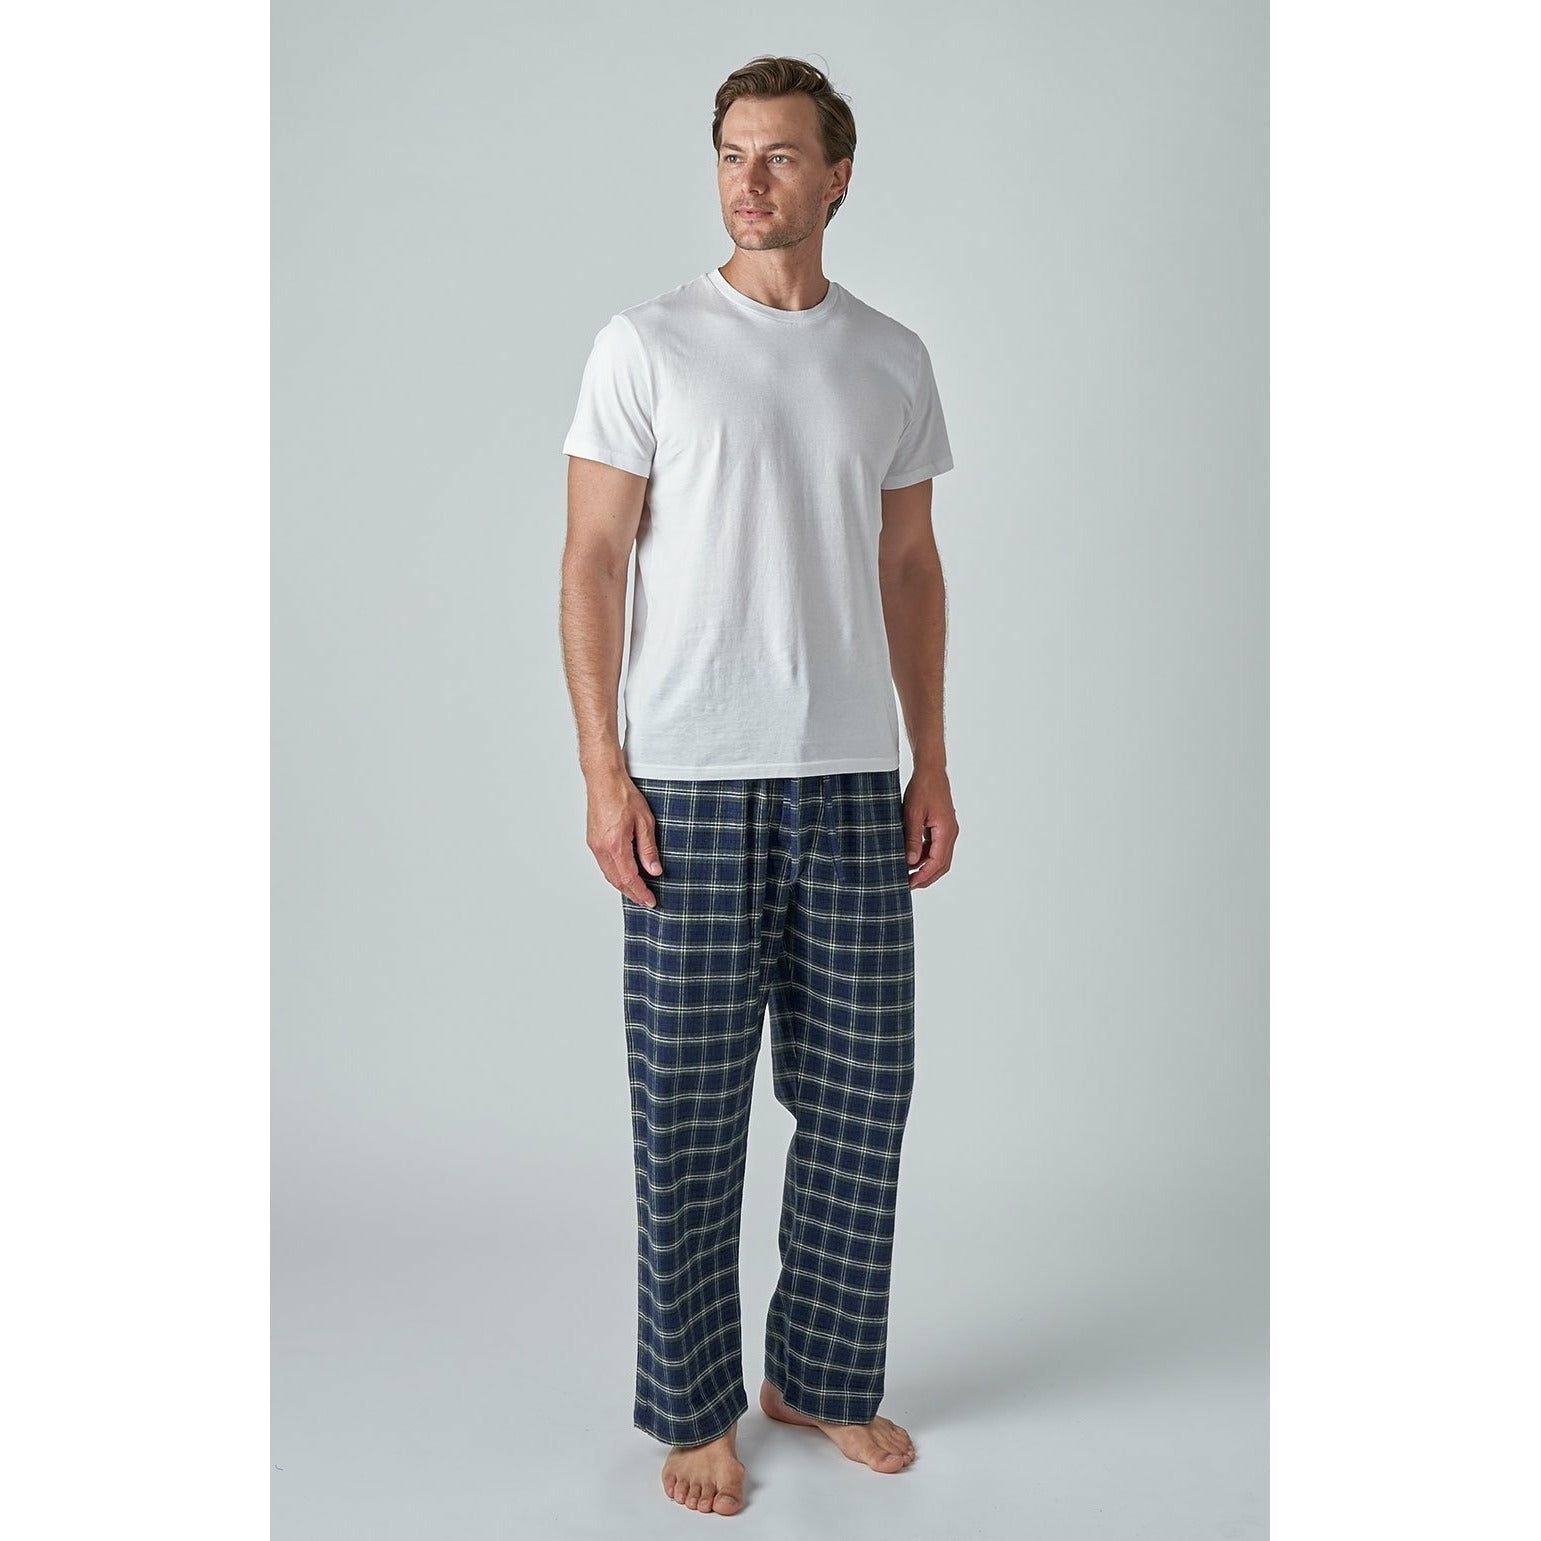 Mens Cotton Pajama Pants, Lightweight Lounge Pant with Pockets Soft Sleep  Bottoms for Men, Black, S - Walmart.com